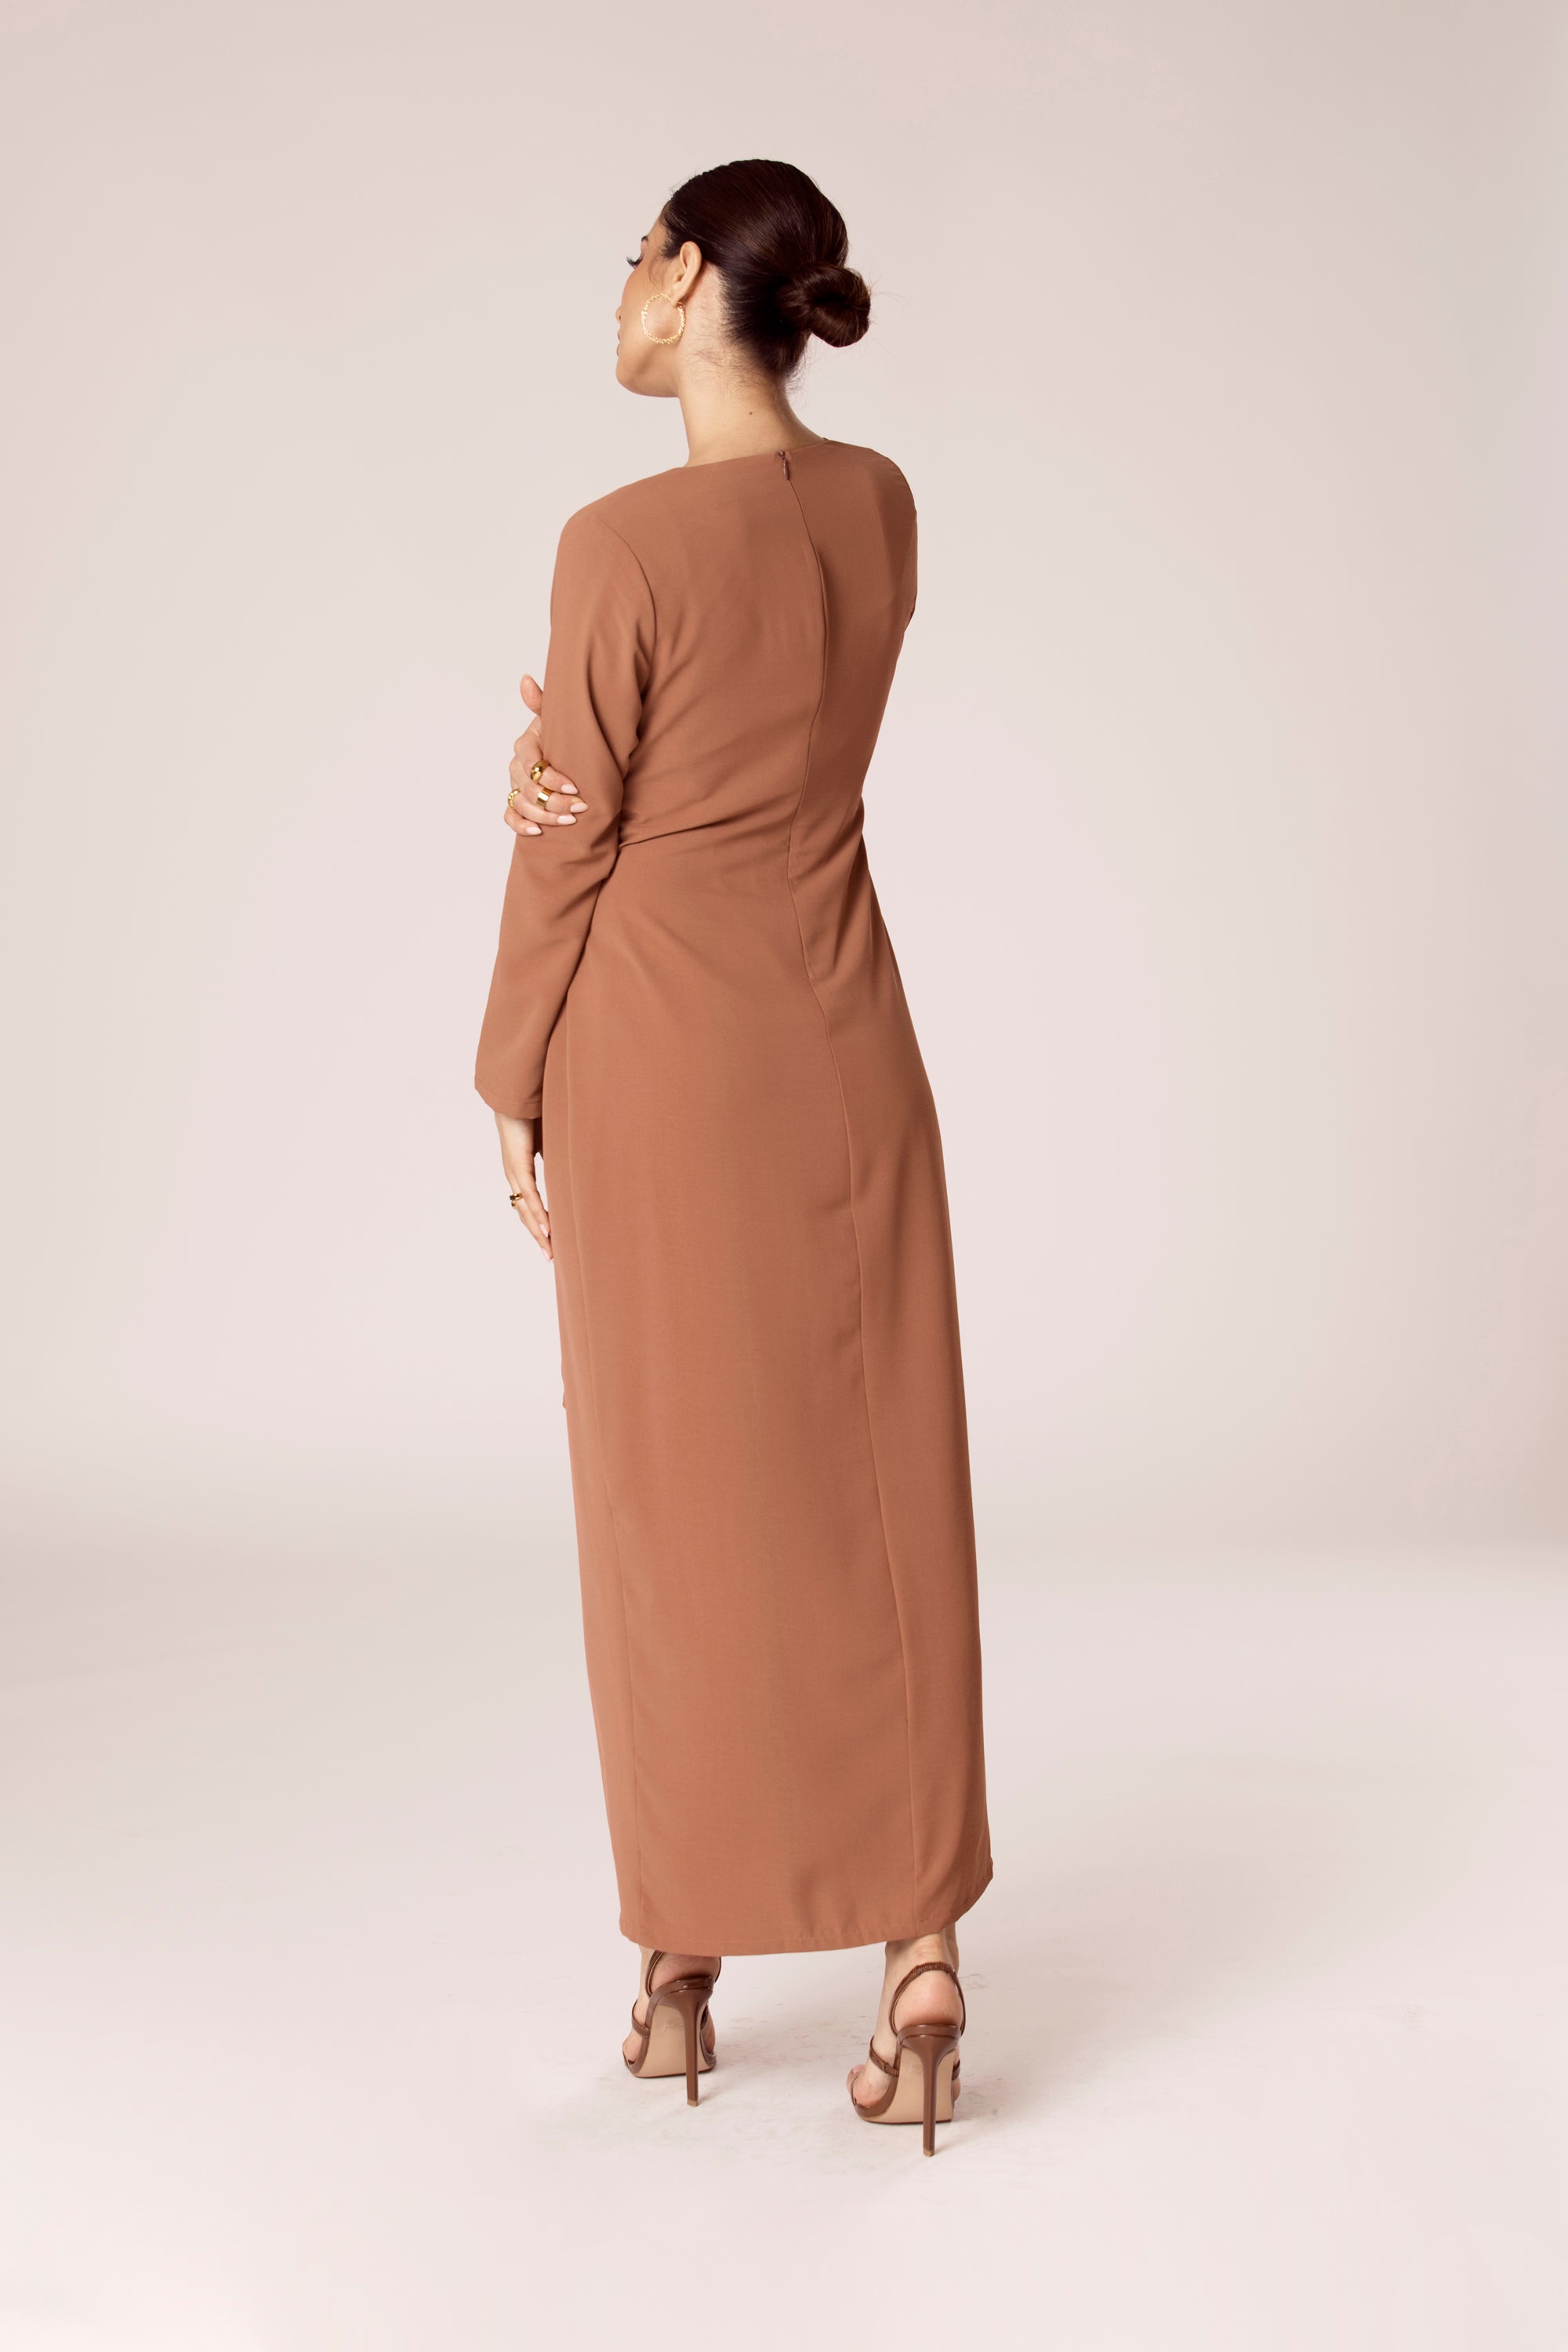 Isabella Tie Waist Maxi Dress - Mushroom Veiled Collection 